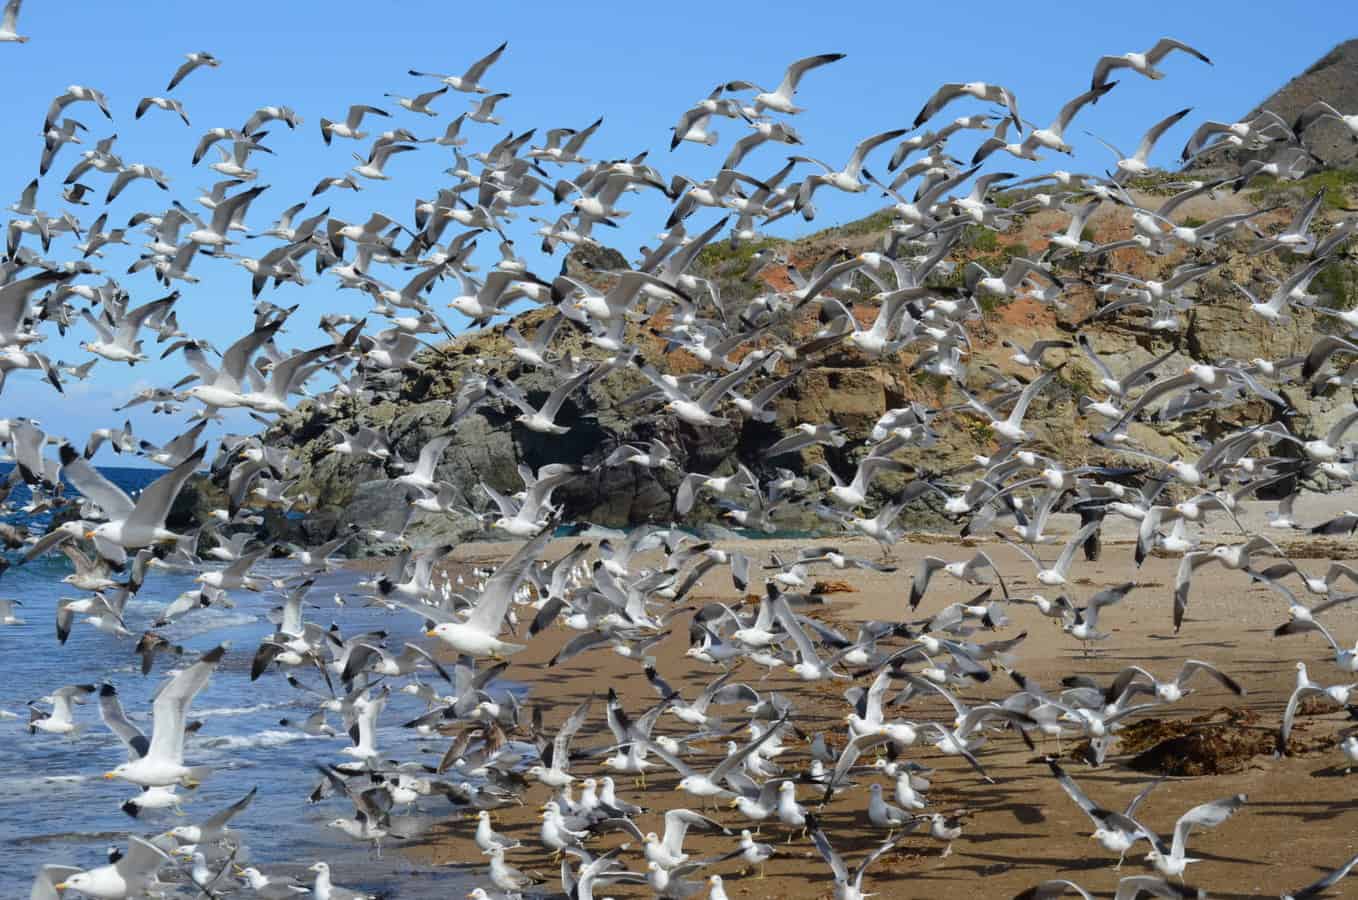 Seagulls flying away